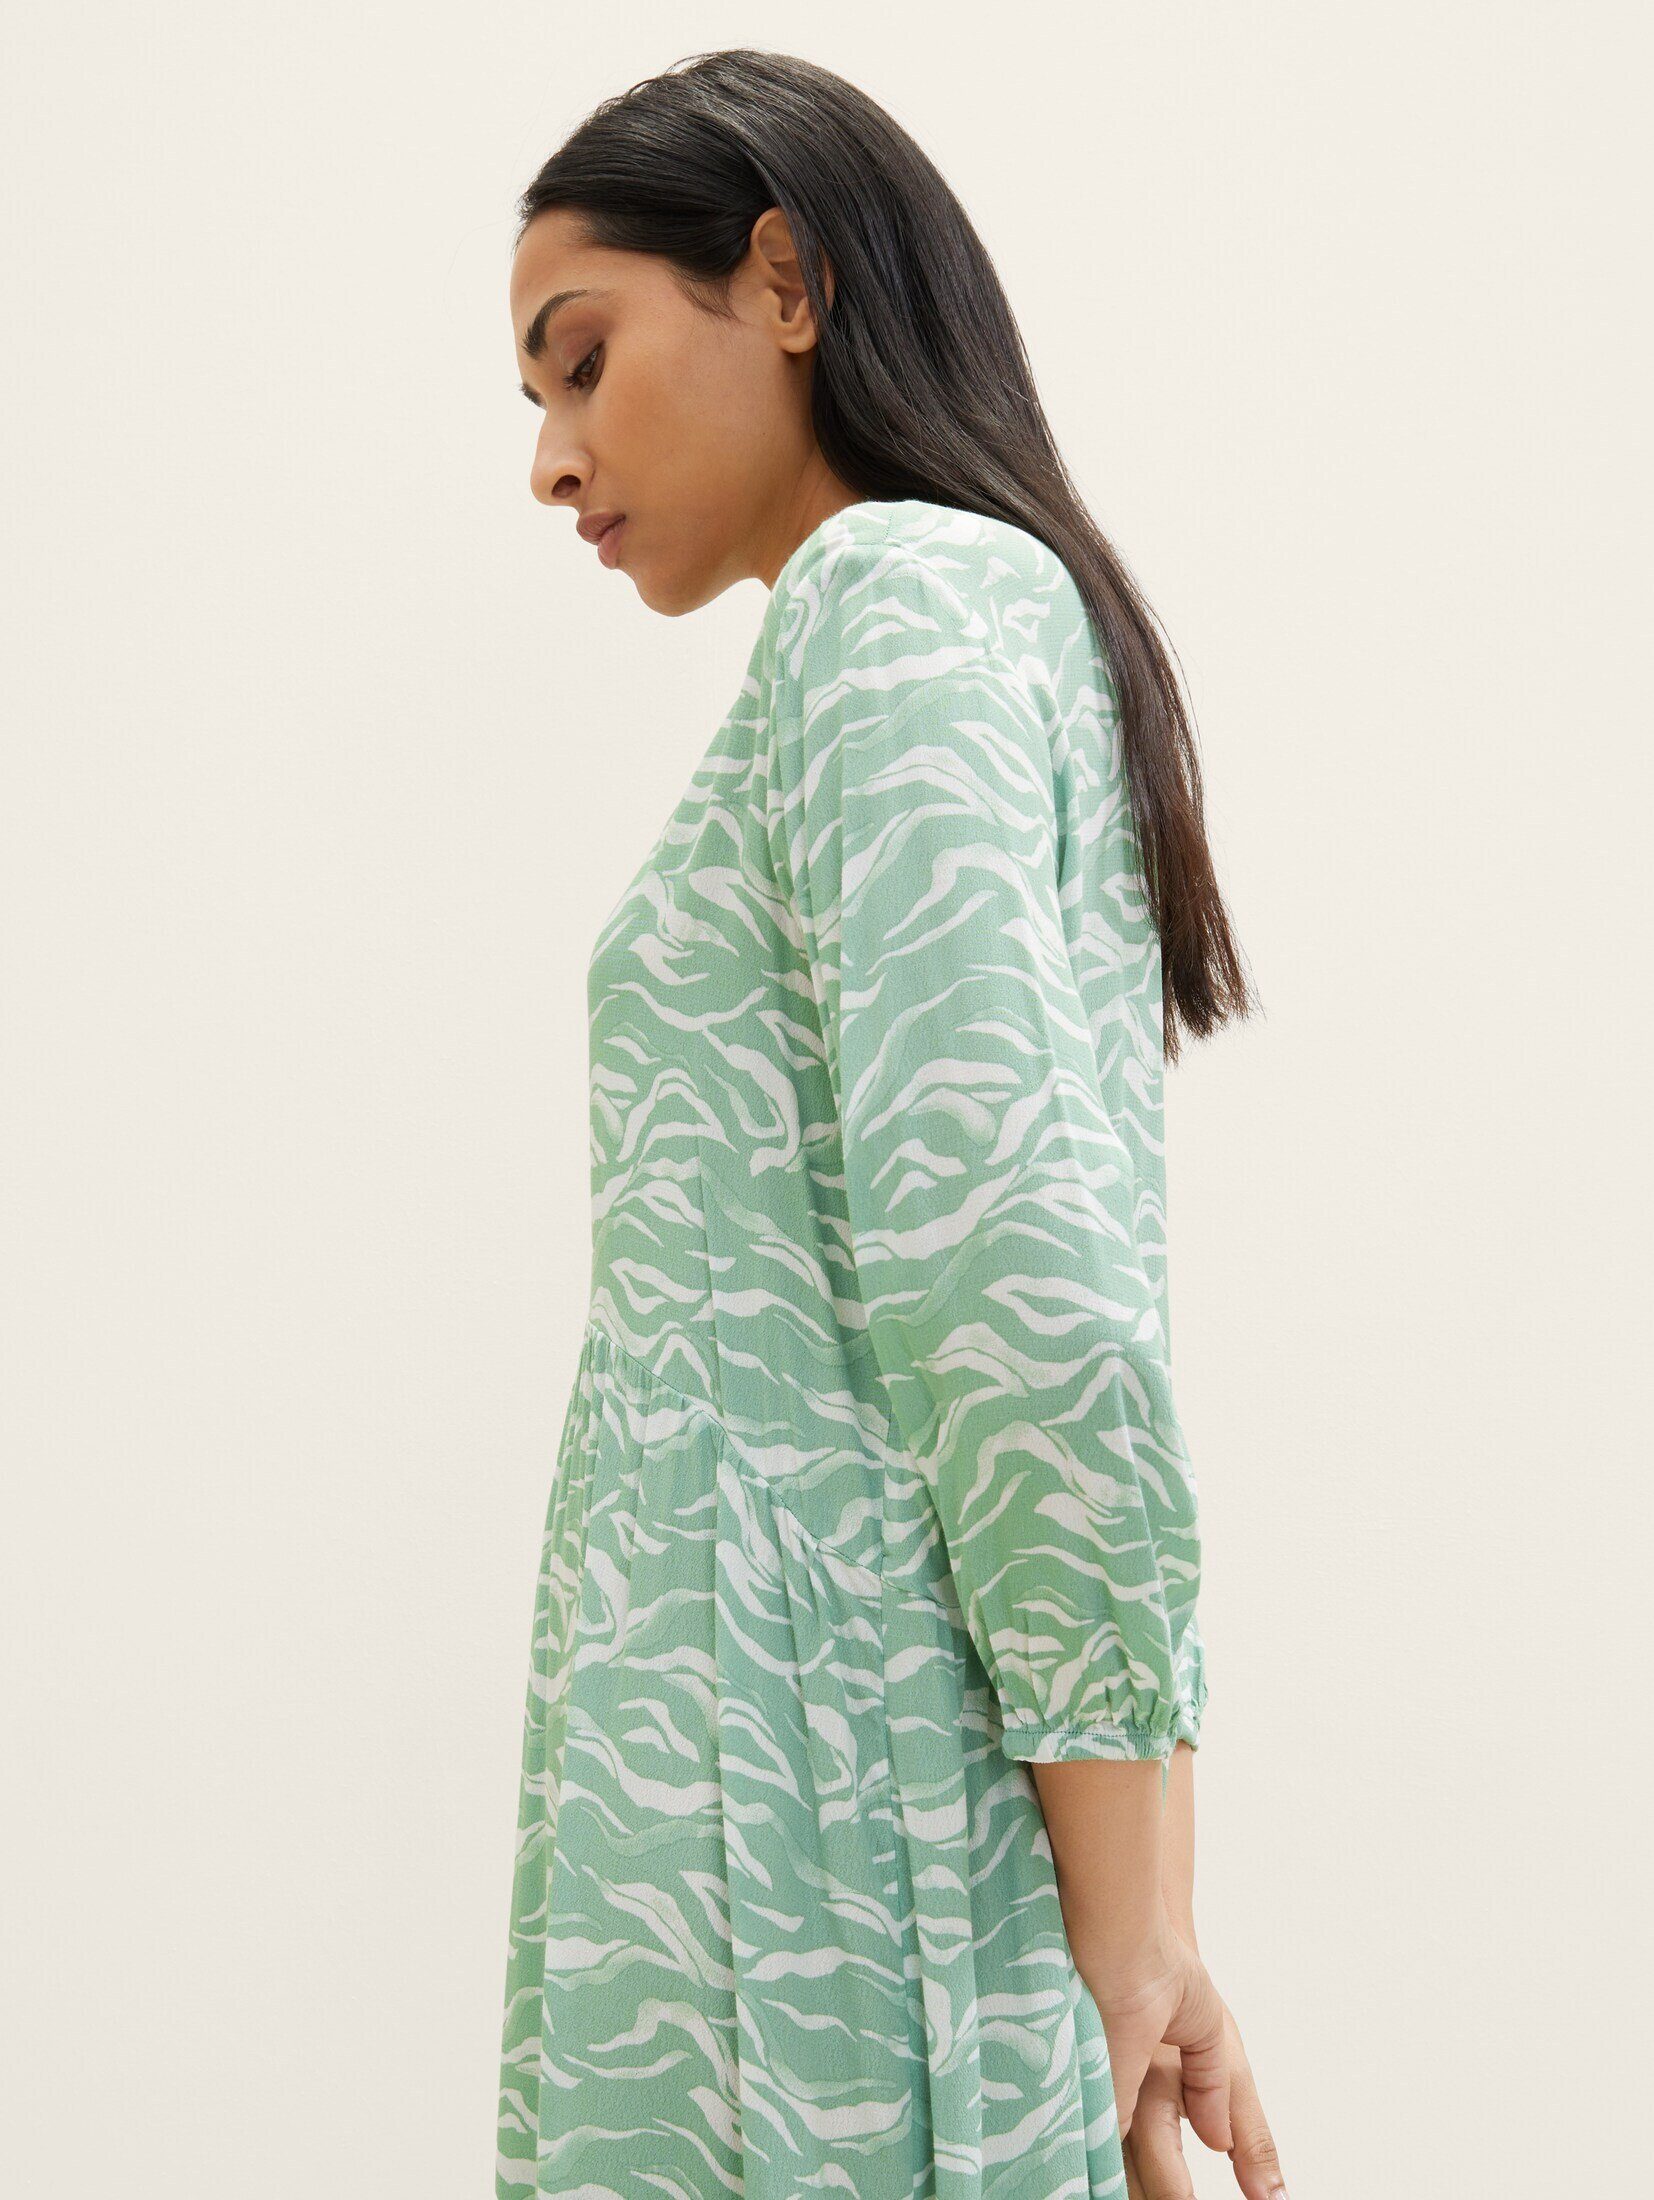 Jerseykleid small green mit Allover-Print design TOM TAILOR wavy Kleid